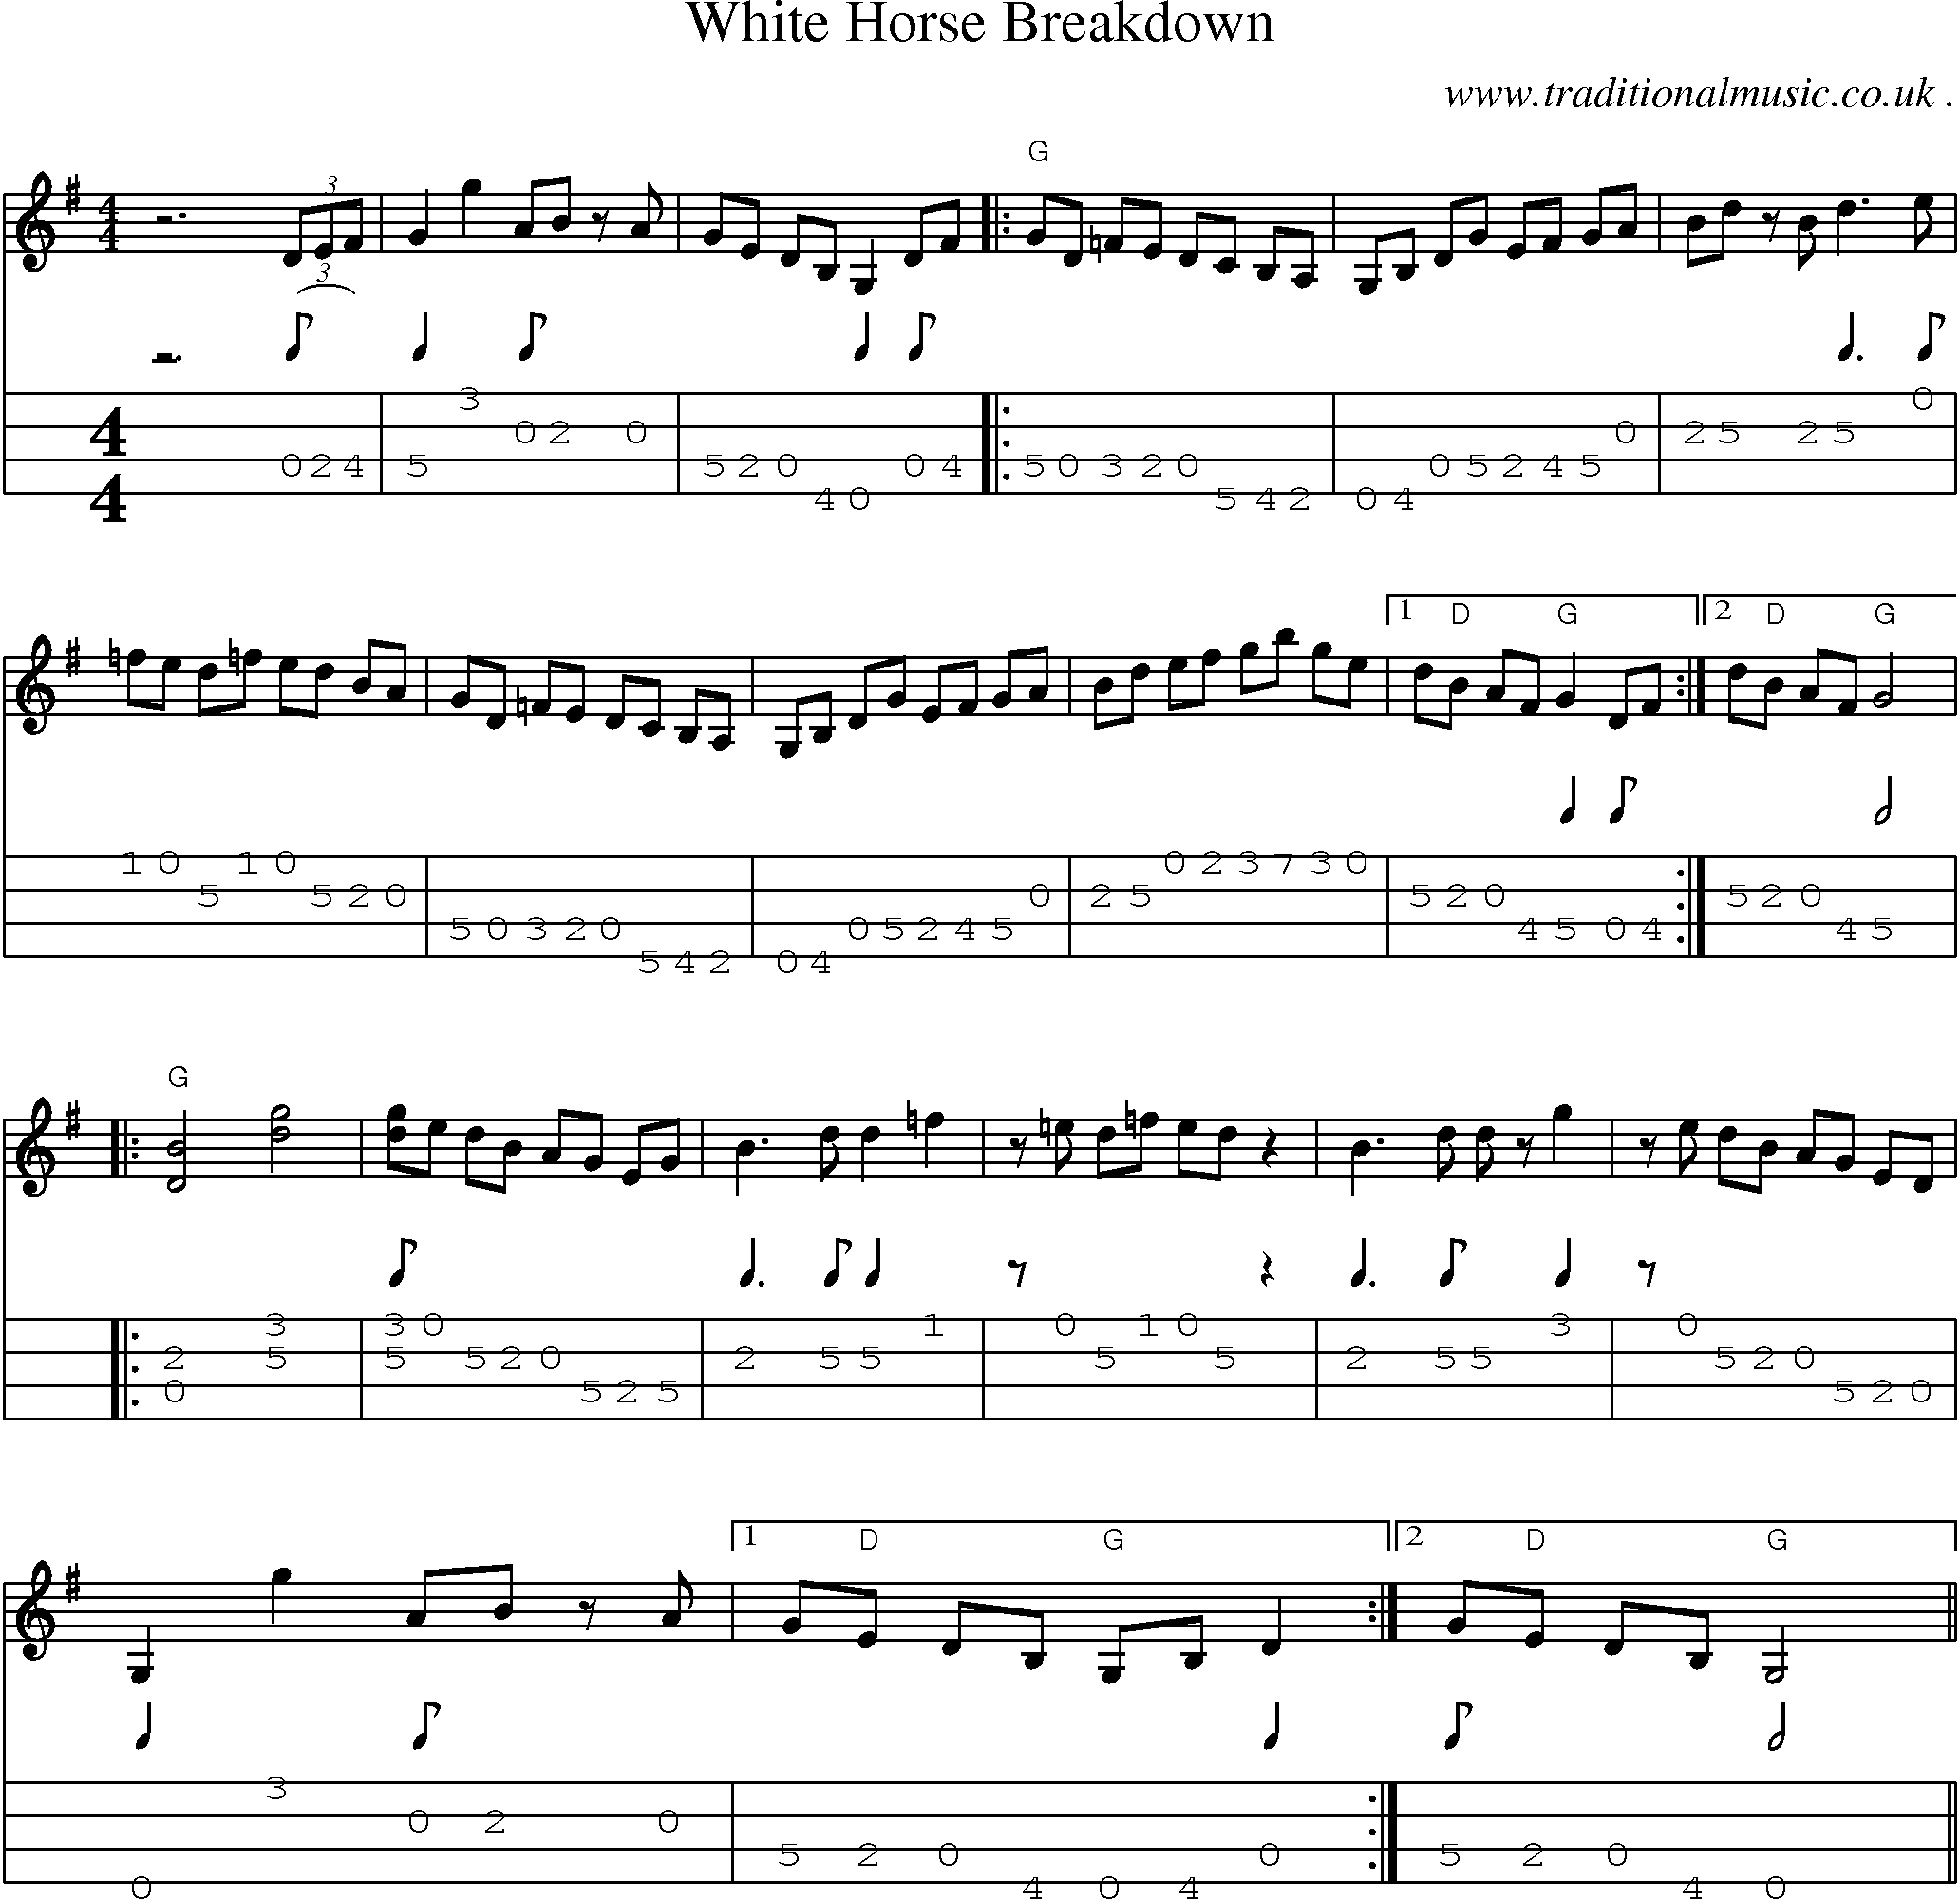 Music Score and Mandolin Tabs for White Horse Breakdown